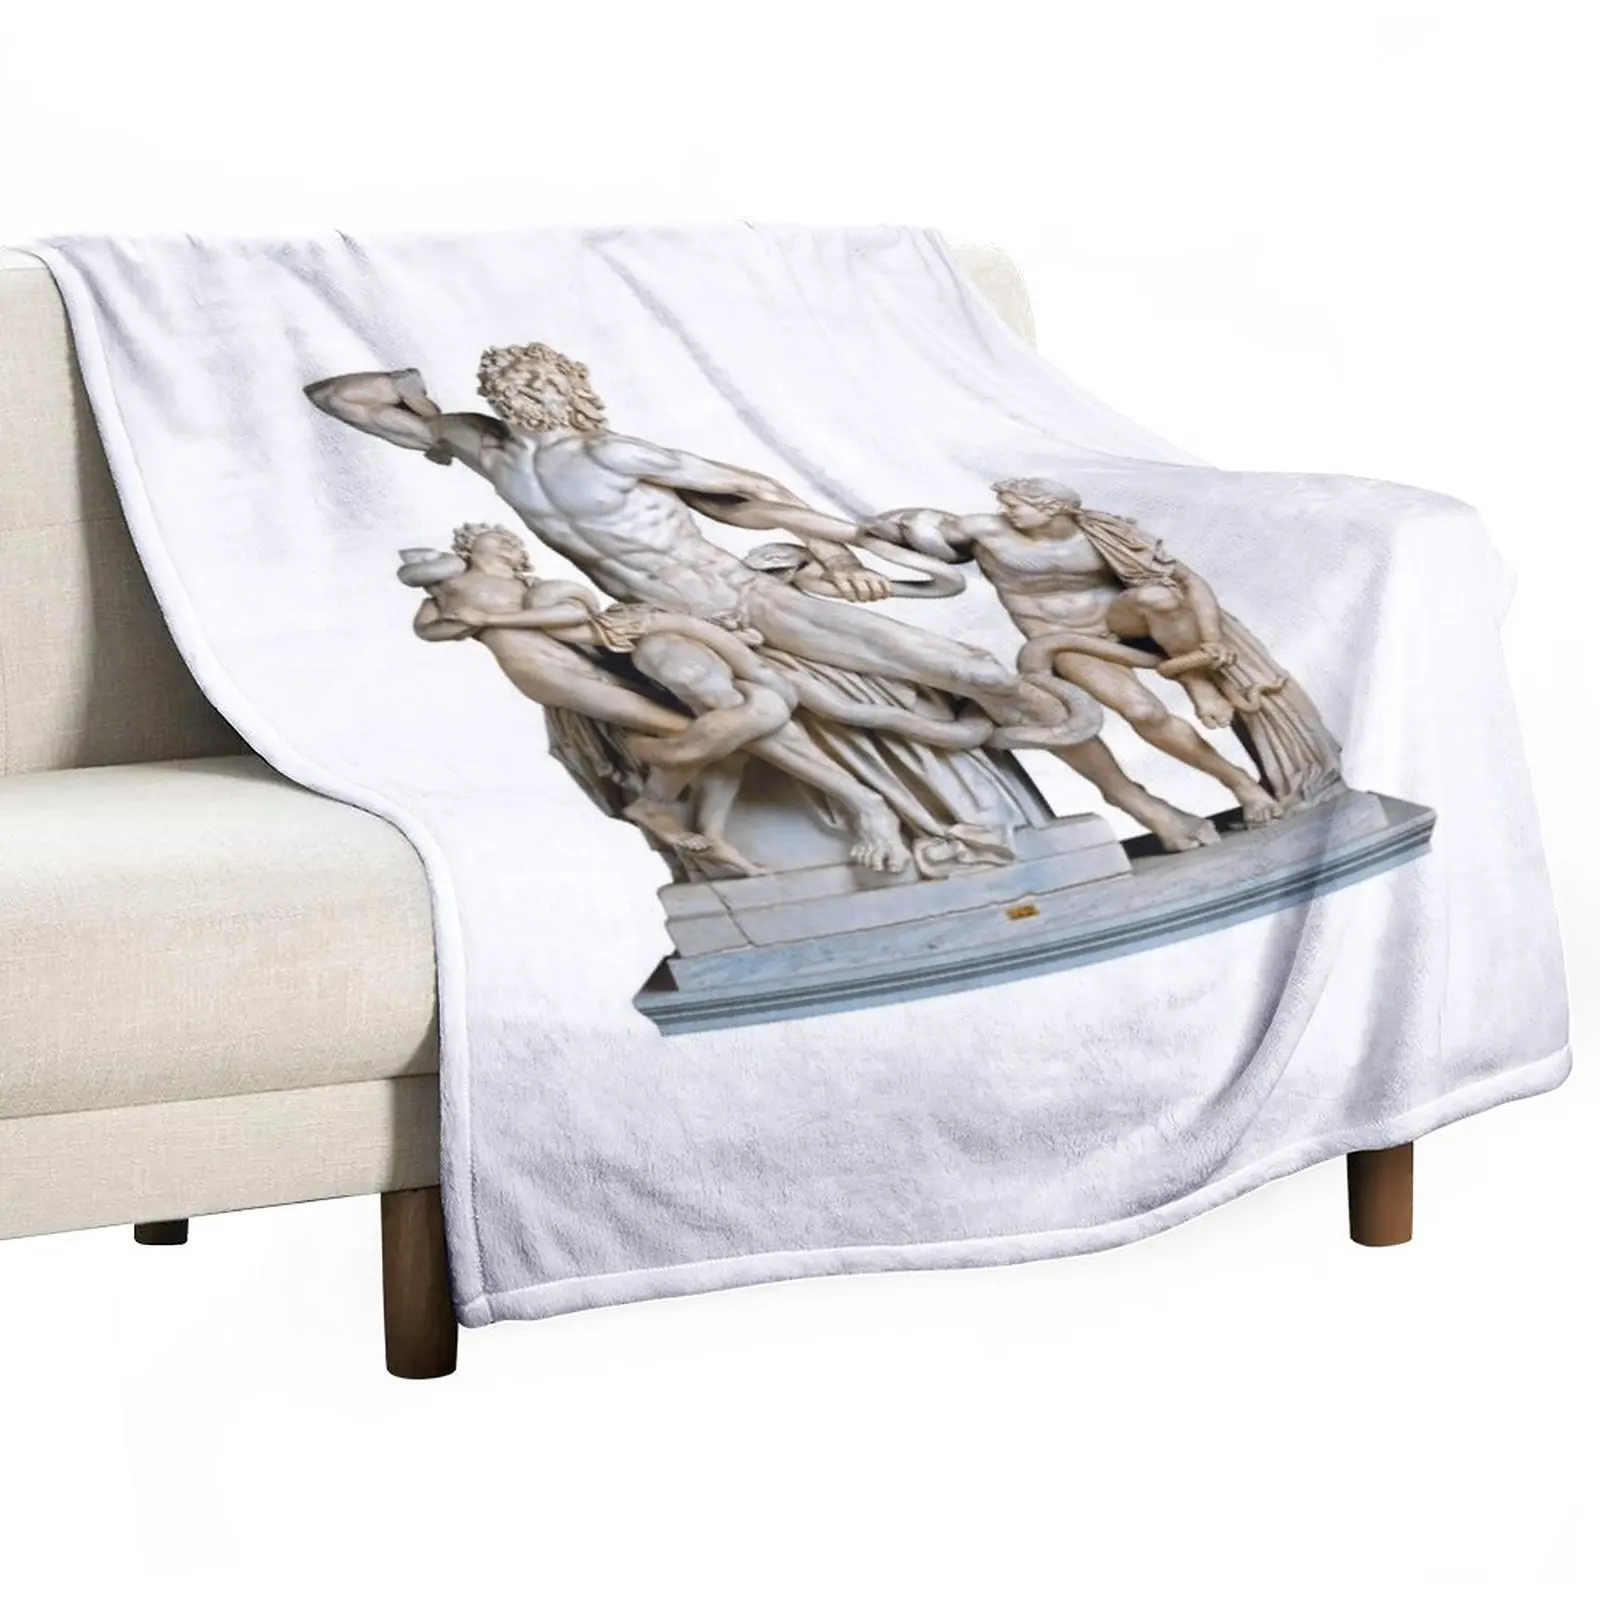 

Laocon and his sons - Greek statue Throw Blanket Fashion Sofa Blankets Summer Blanket Plaid Warm Blanket